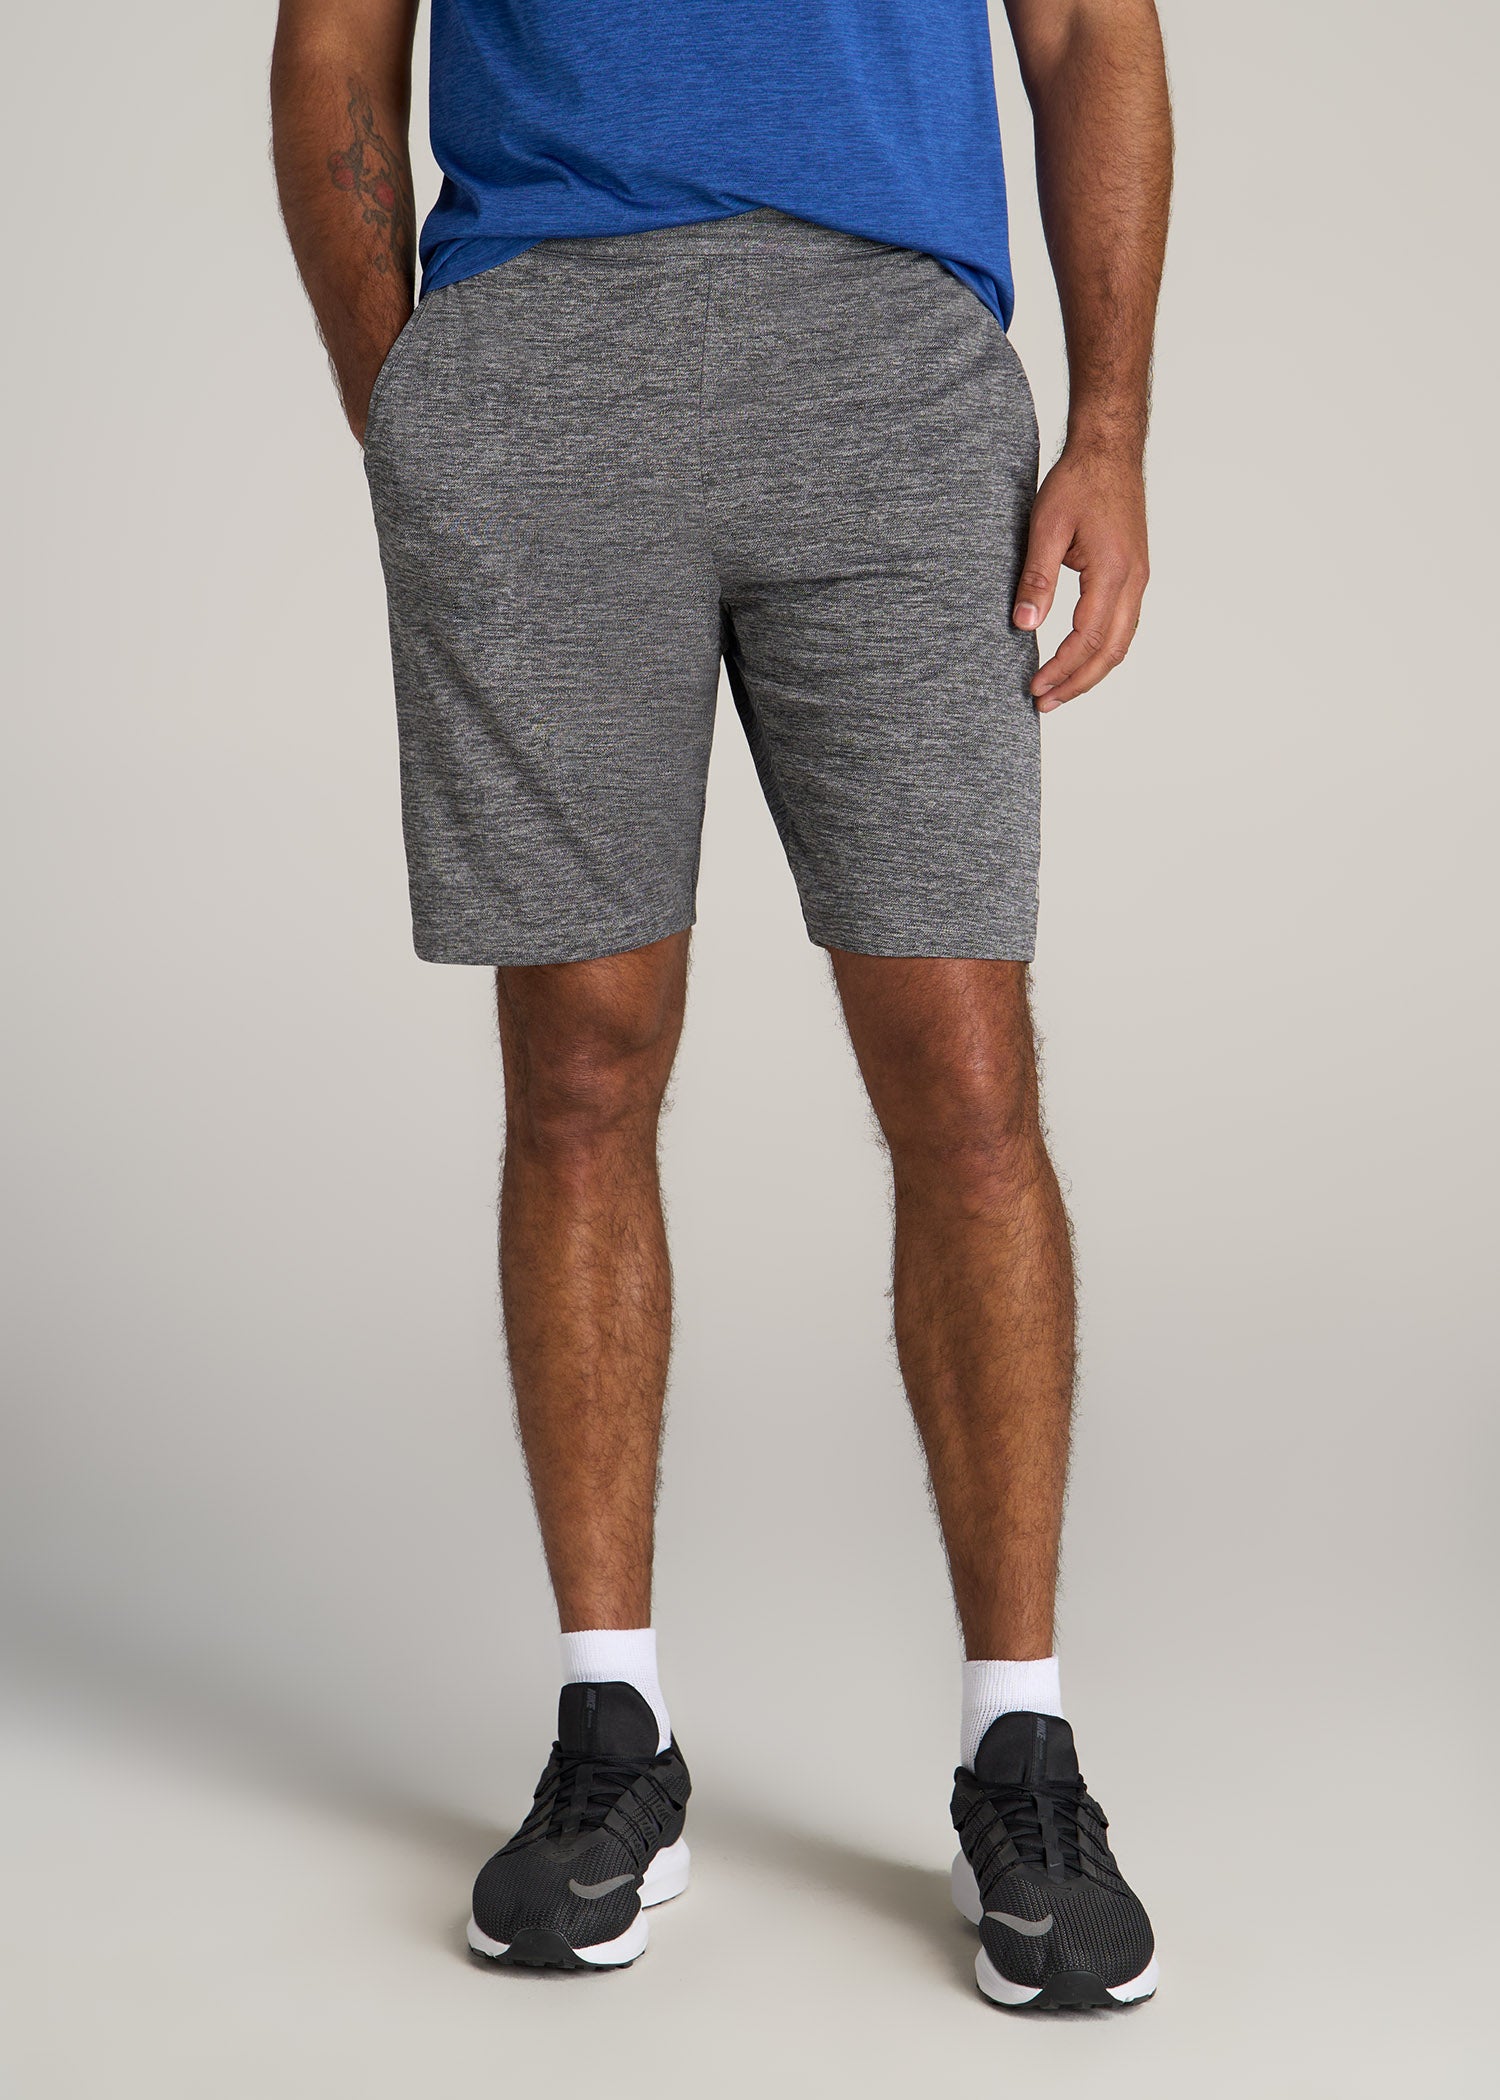 Tek Gear 100% Acrylic Athletic Shorts for Men